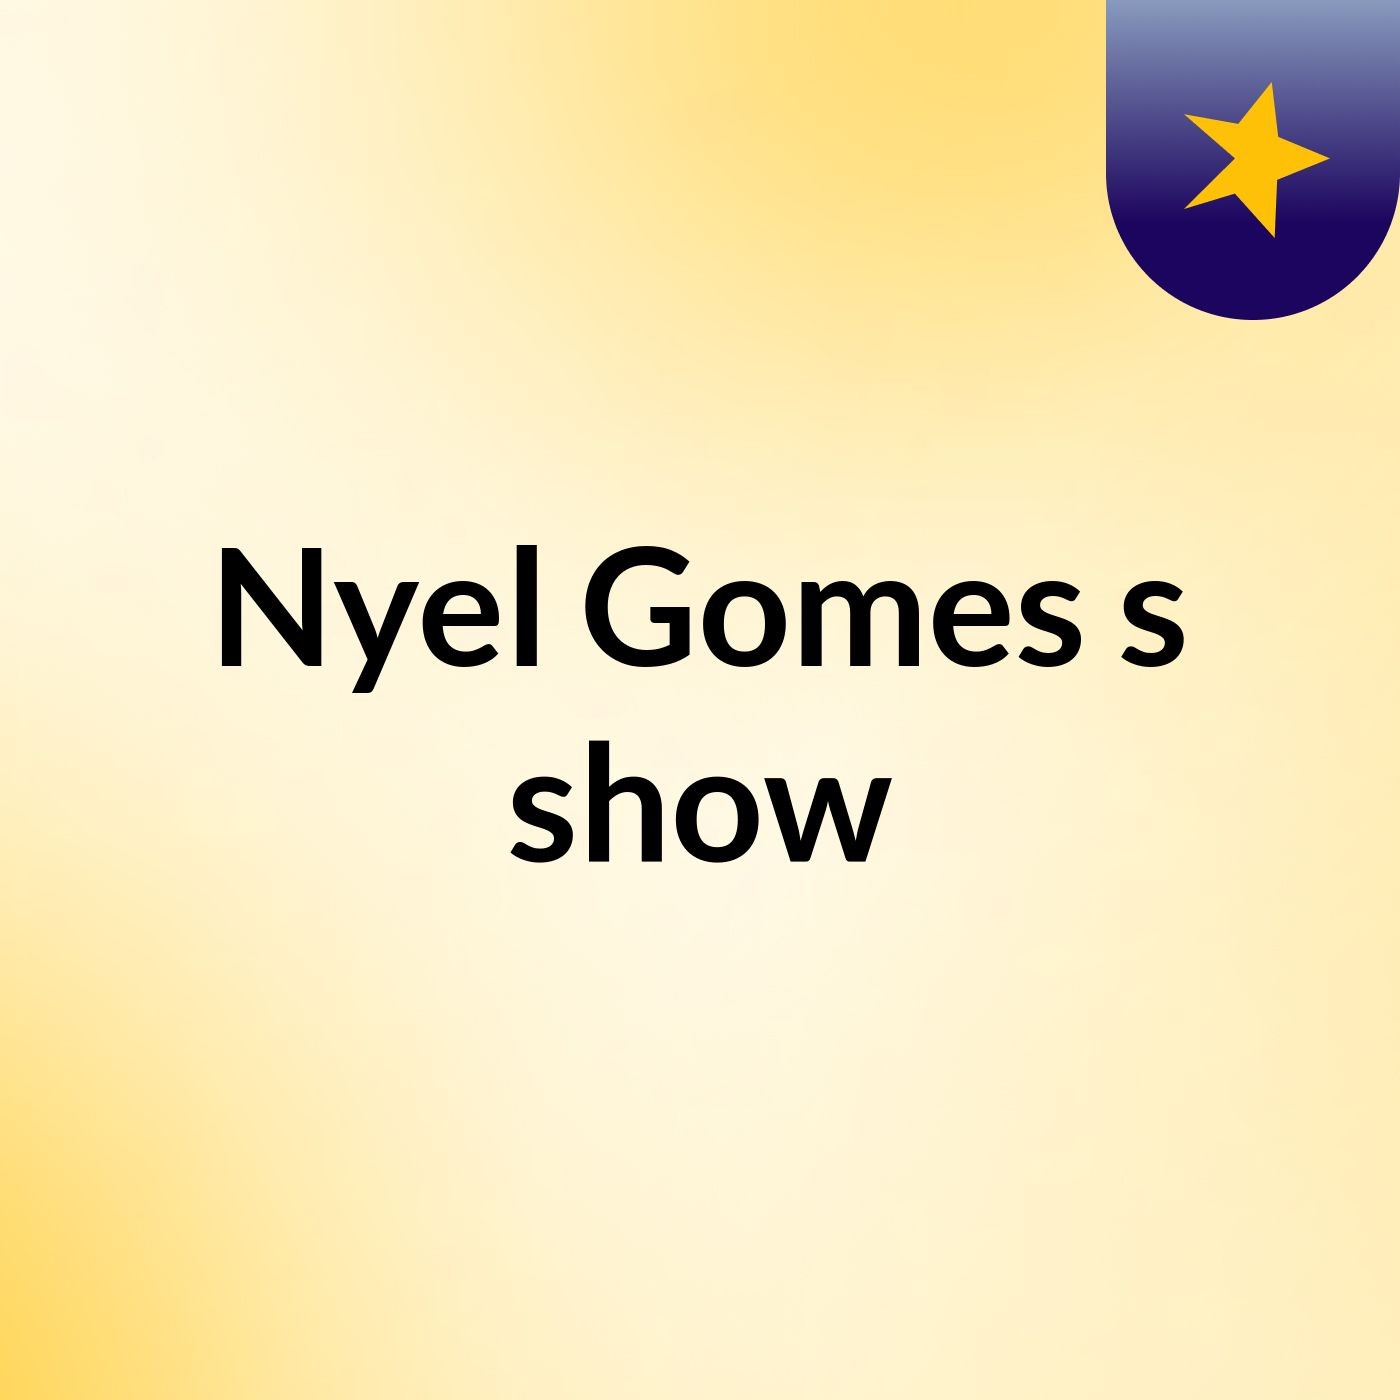 Nyel Gomes's show